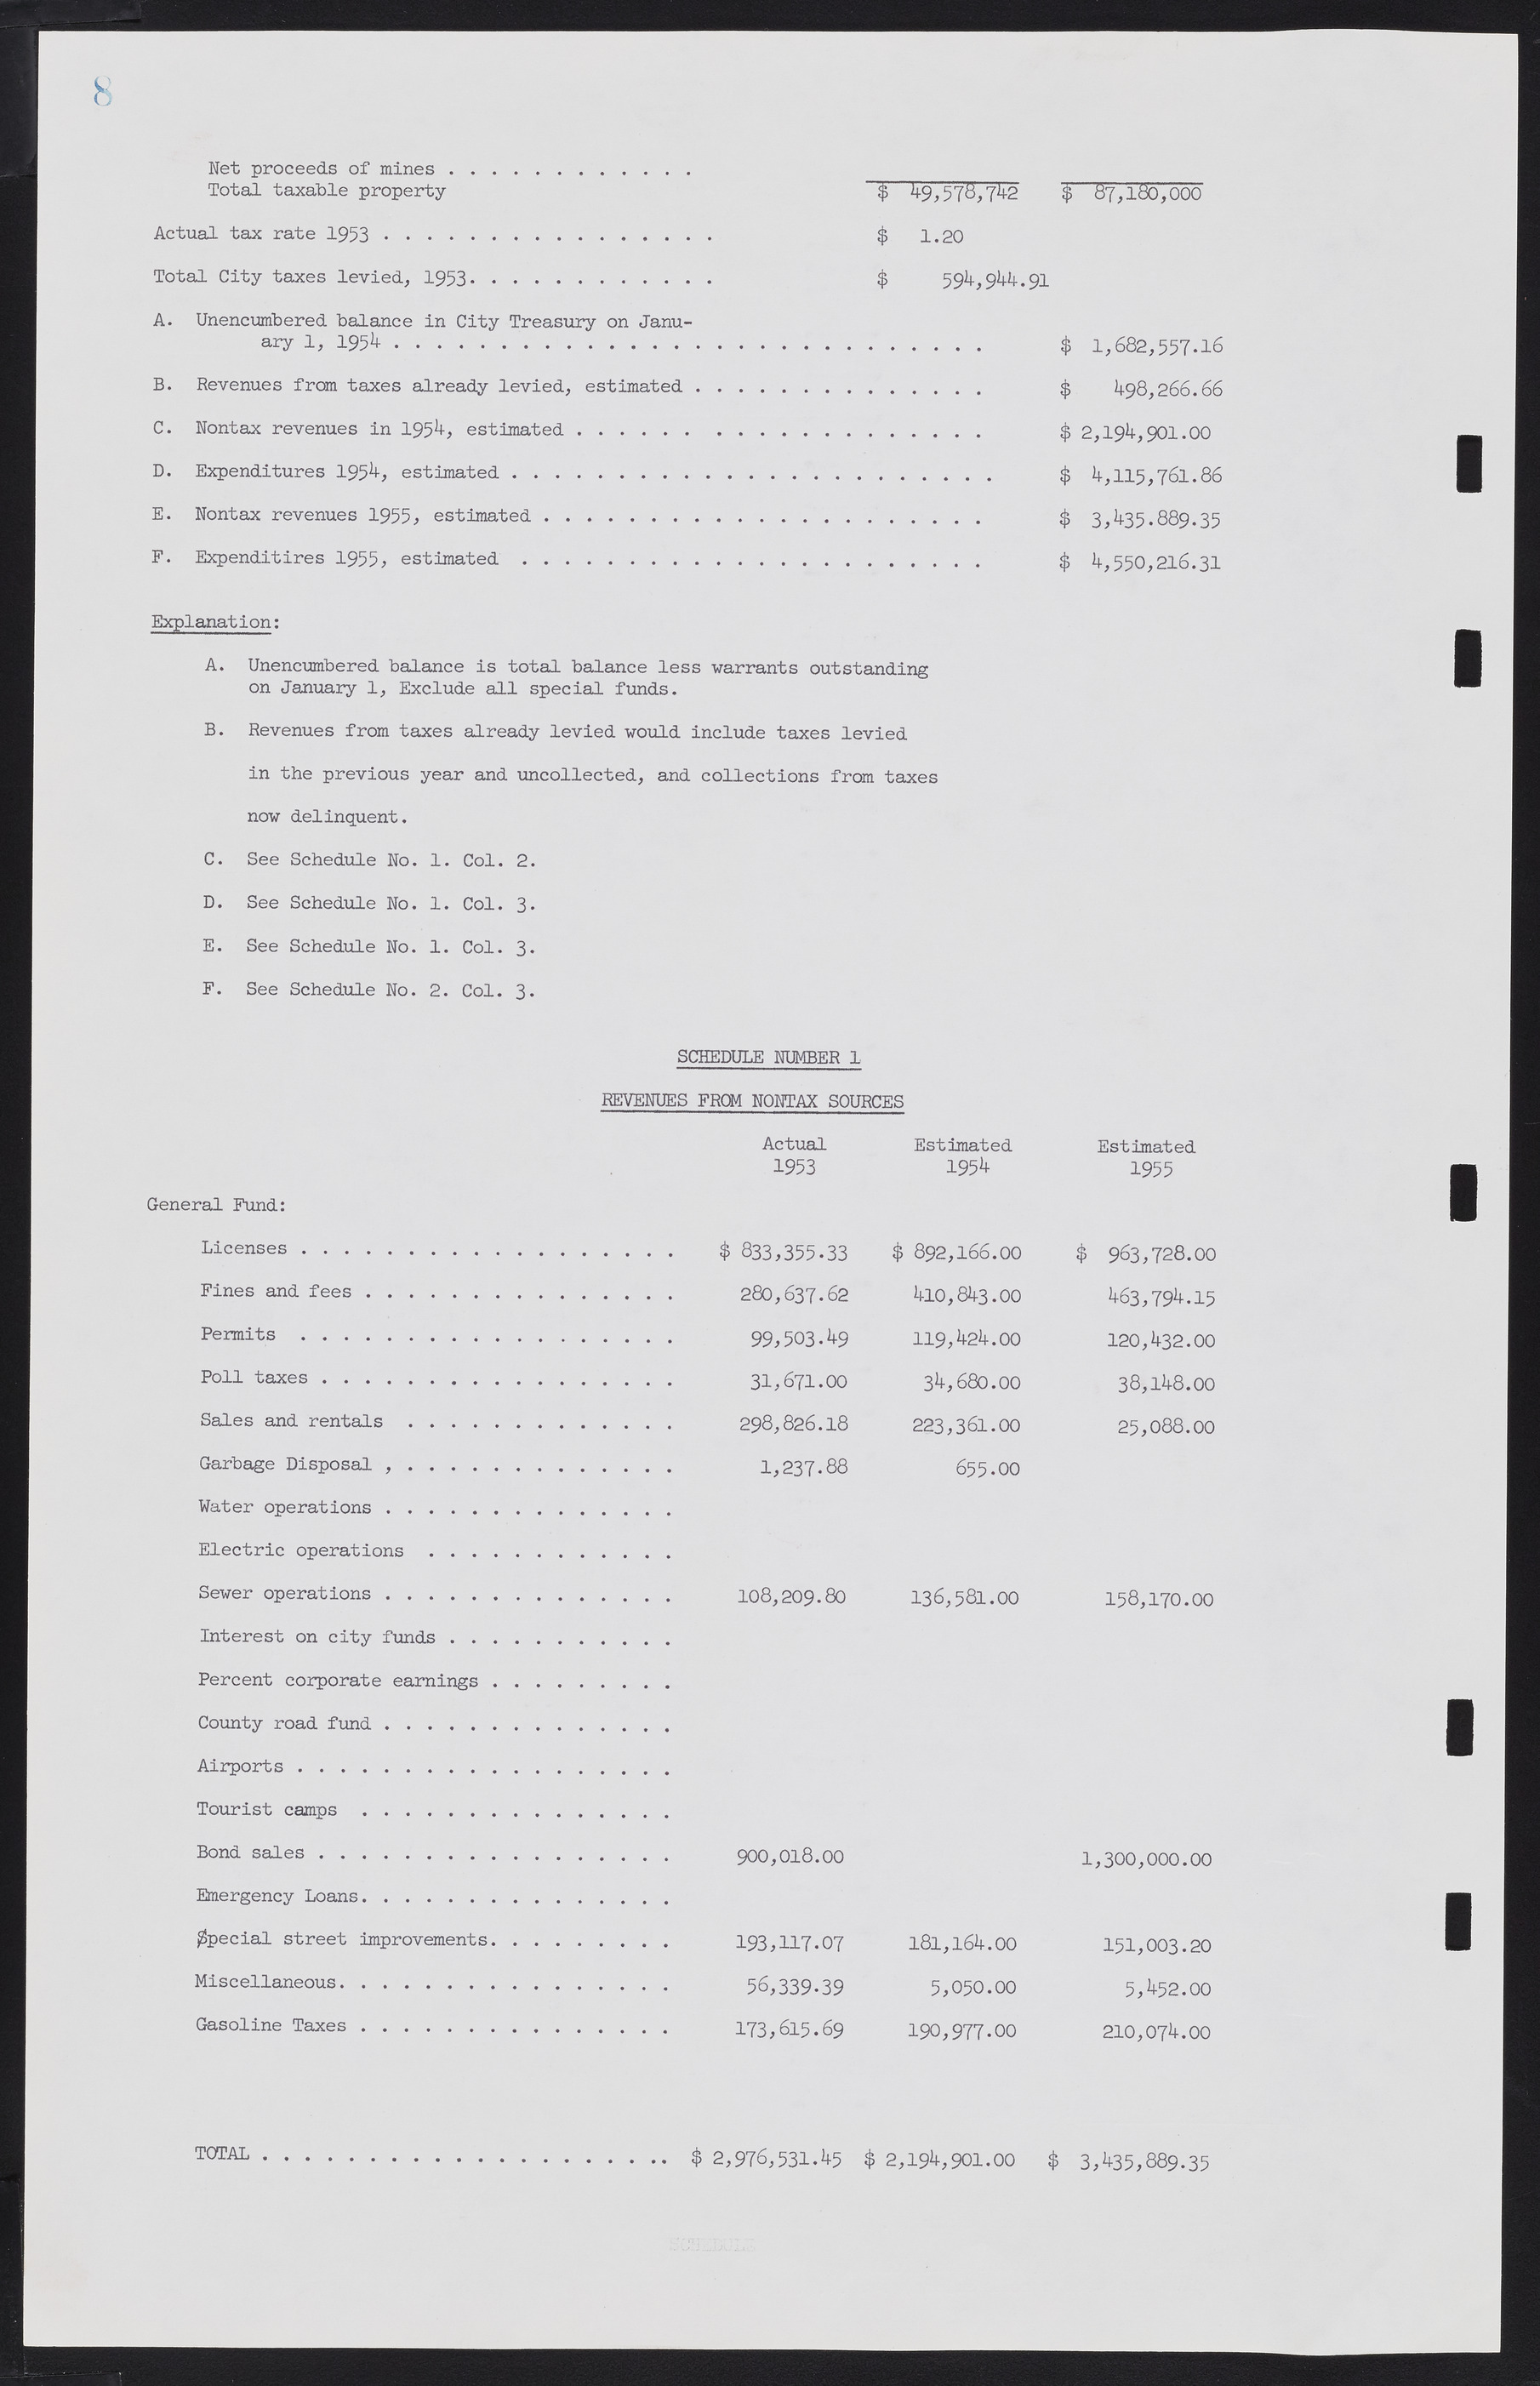 Las Vegas City Commission Minutes, February 17, 1954 to September 21, 1955, lvc000009-12